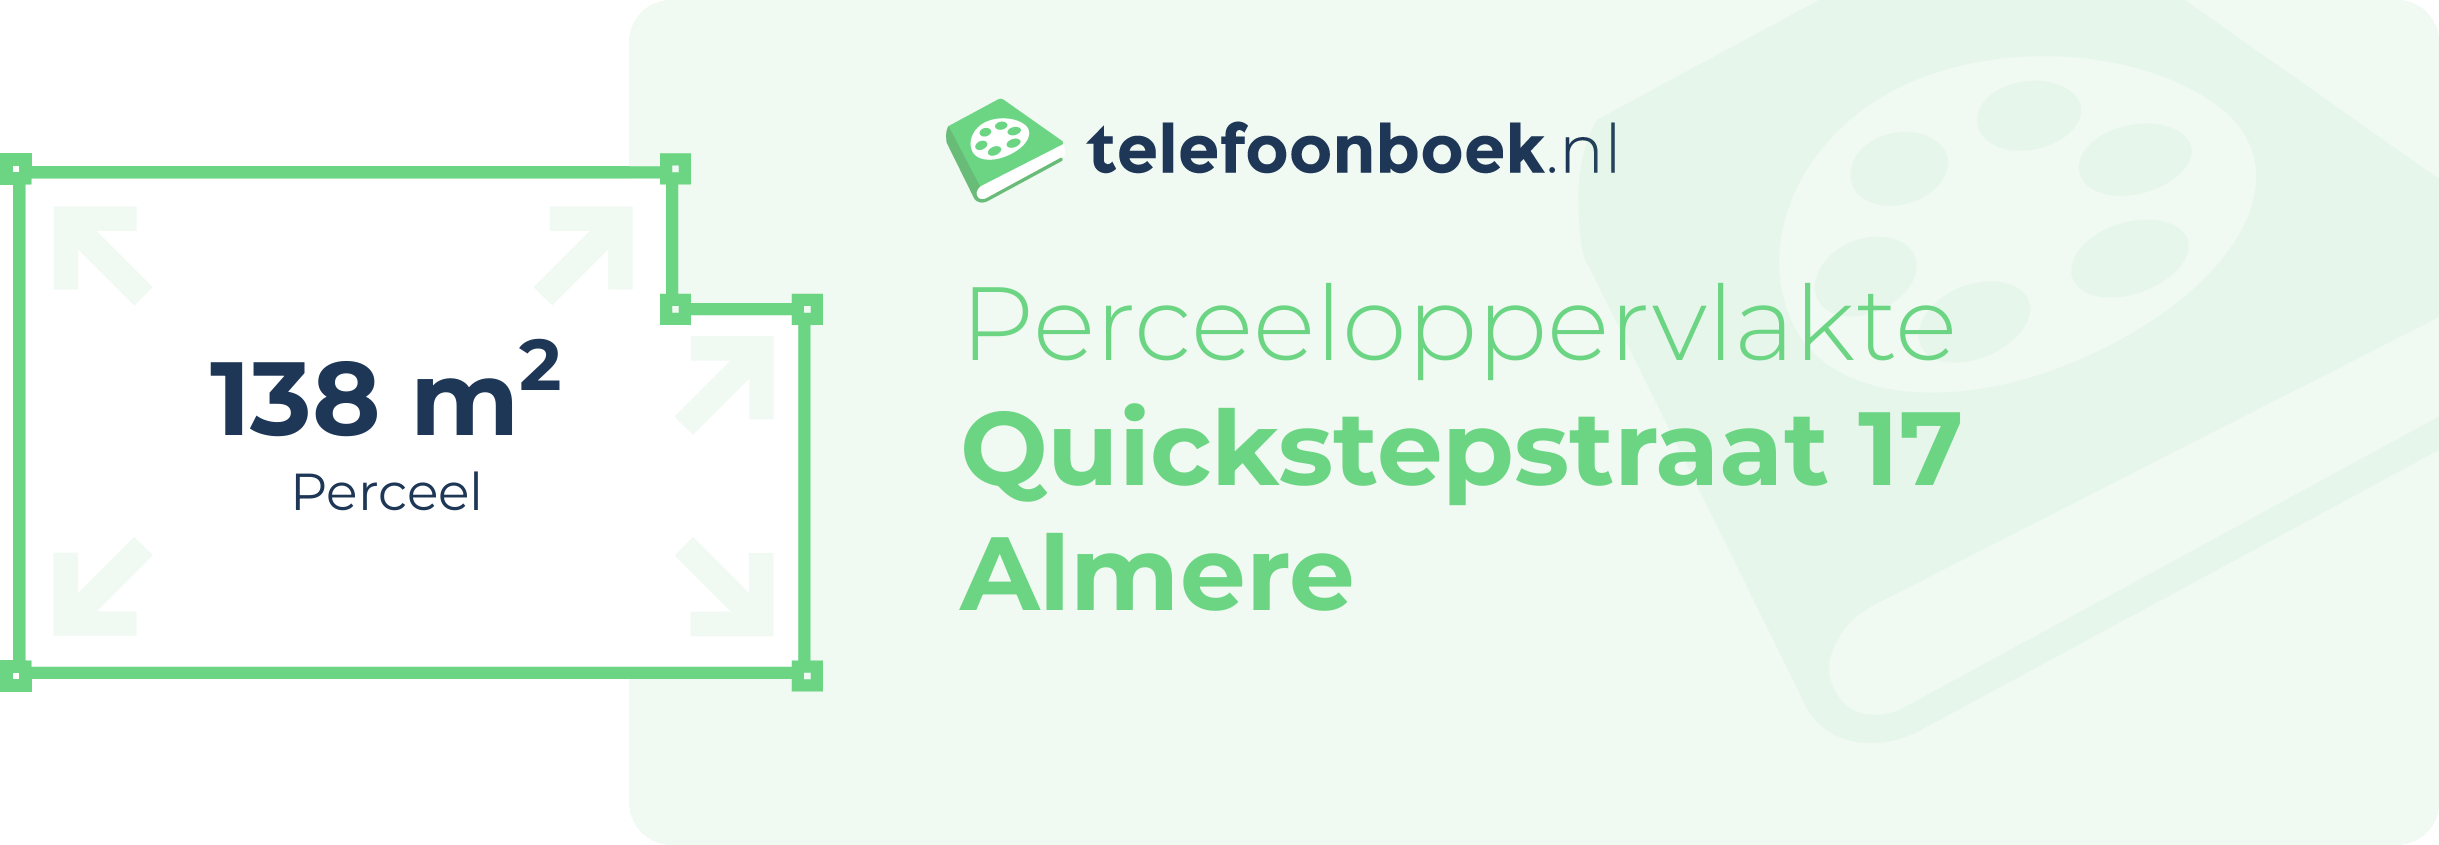 Perceeloppervlakte Quickstepstraat 17 Almere